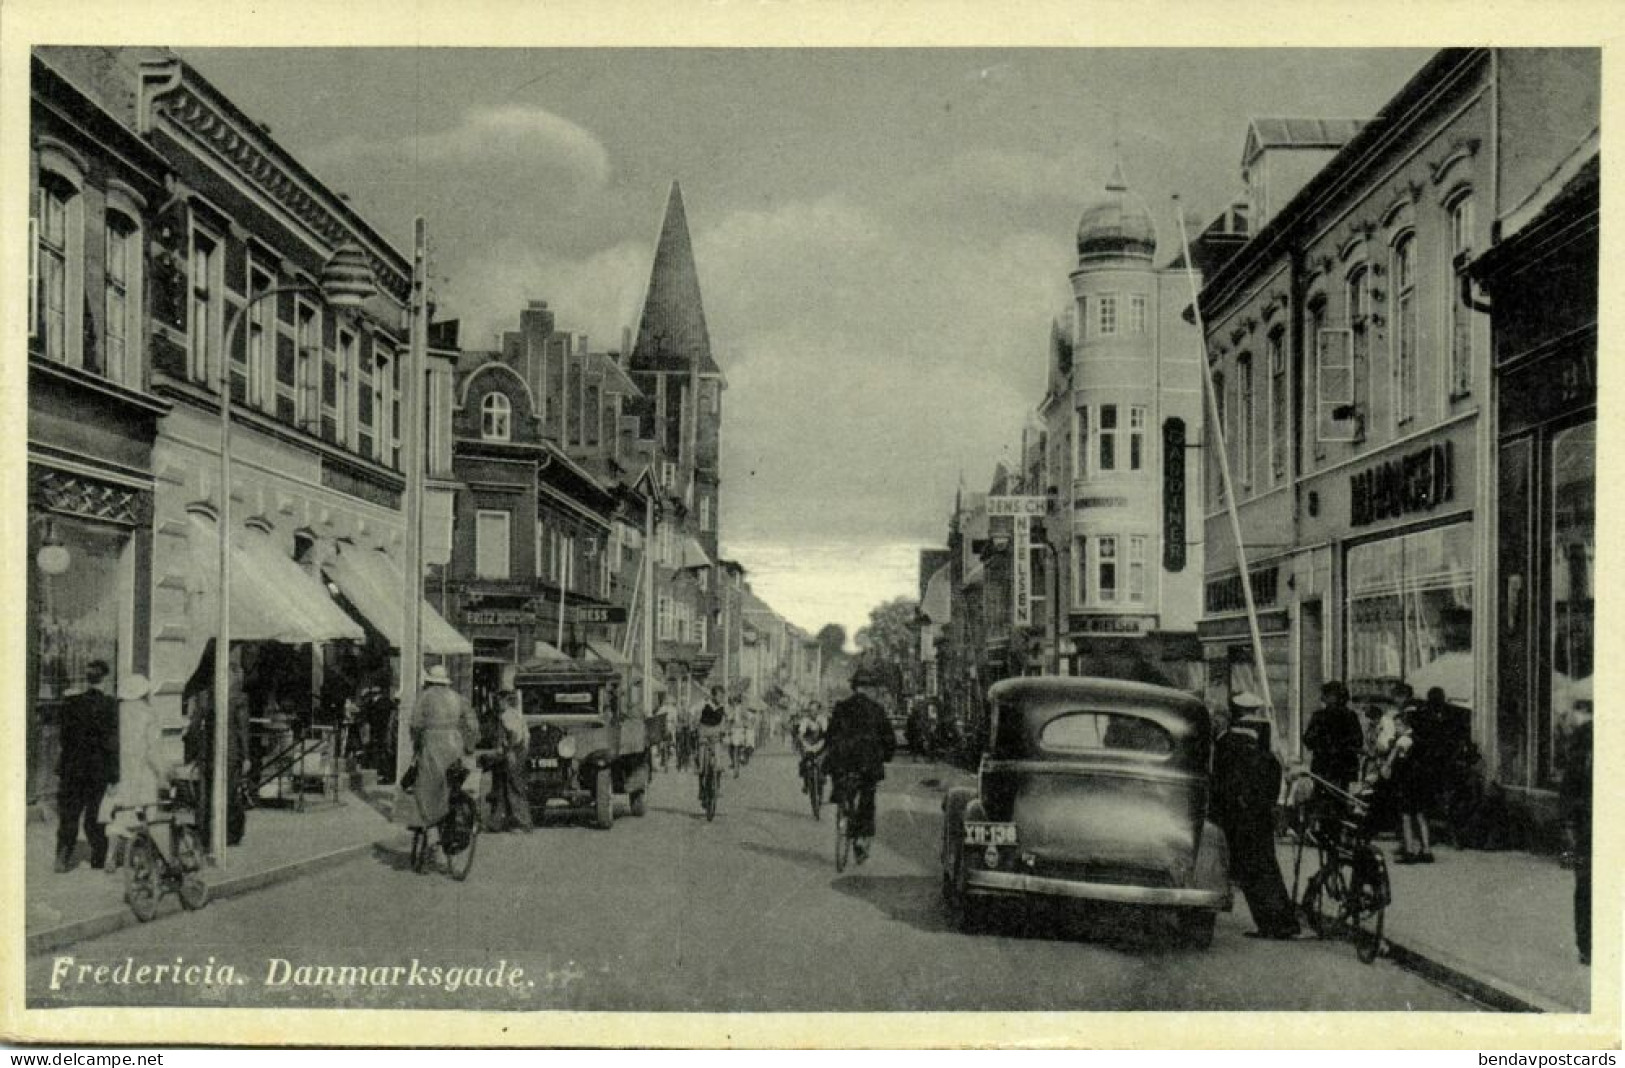 Denmark, FREDERICIA, Jutland, Danmarksgade, Shops, Cars (1930s) Postcard - Danemark